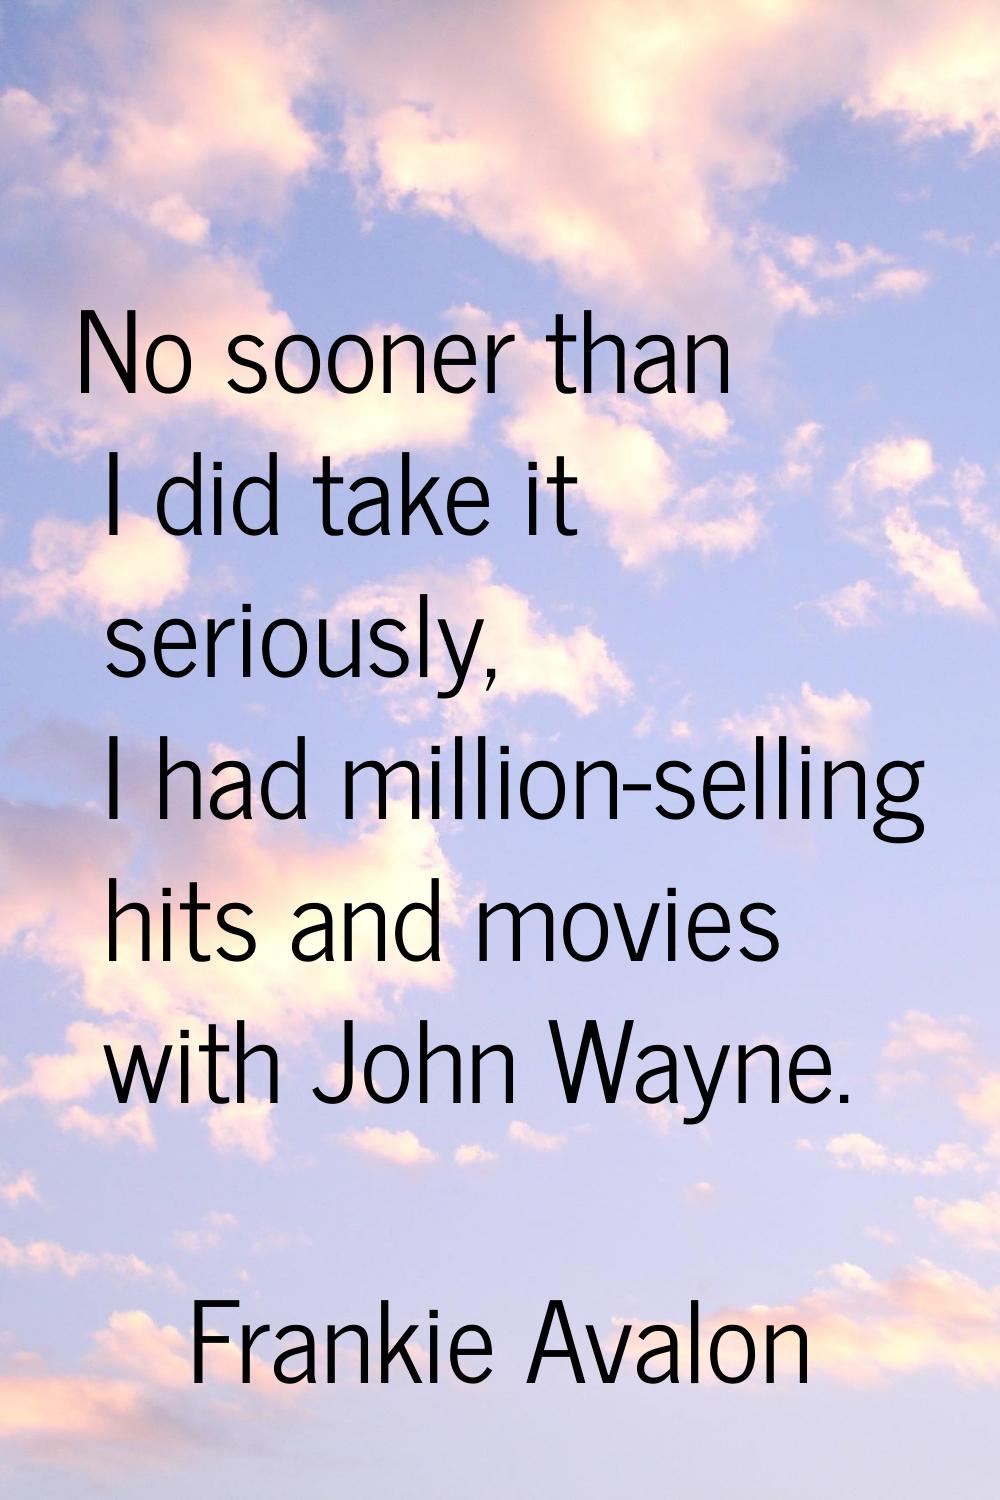 No sooner than I did take it seriously, I had million-selling hits and movies with John Wayne.